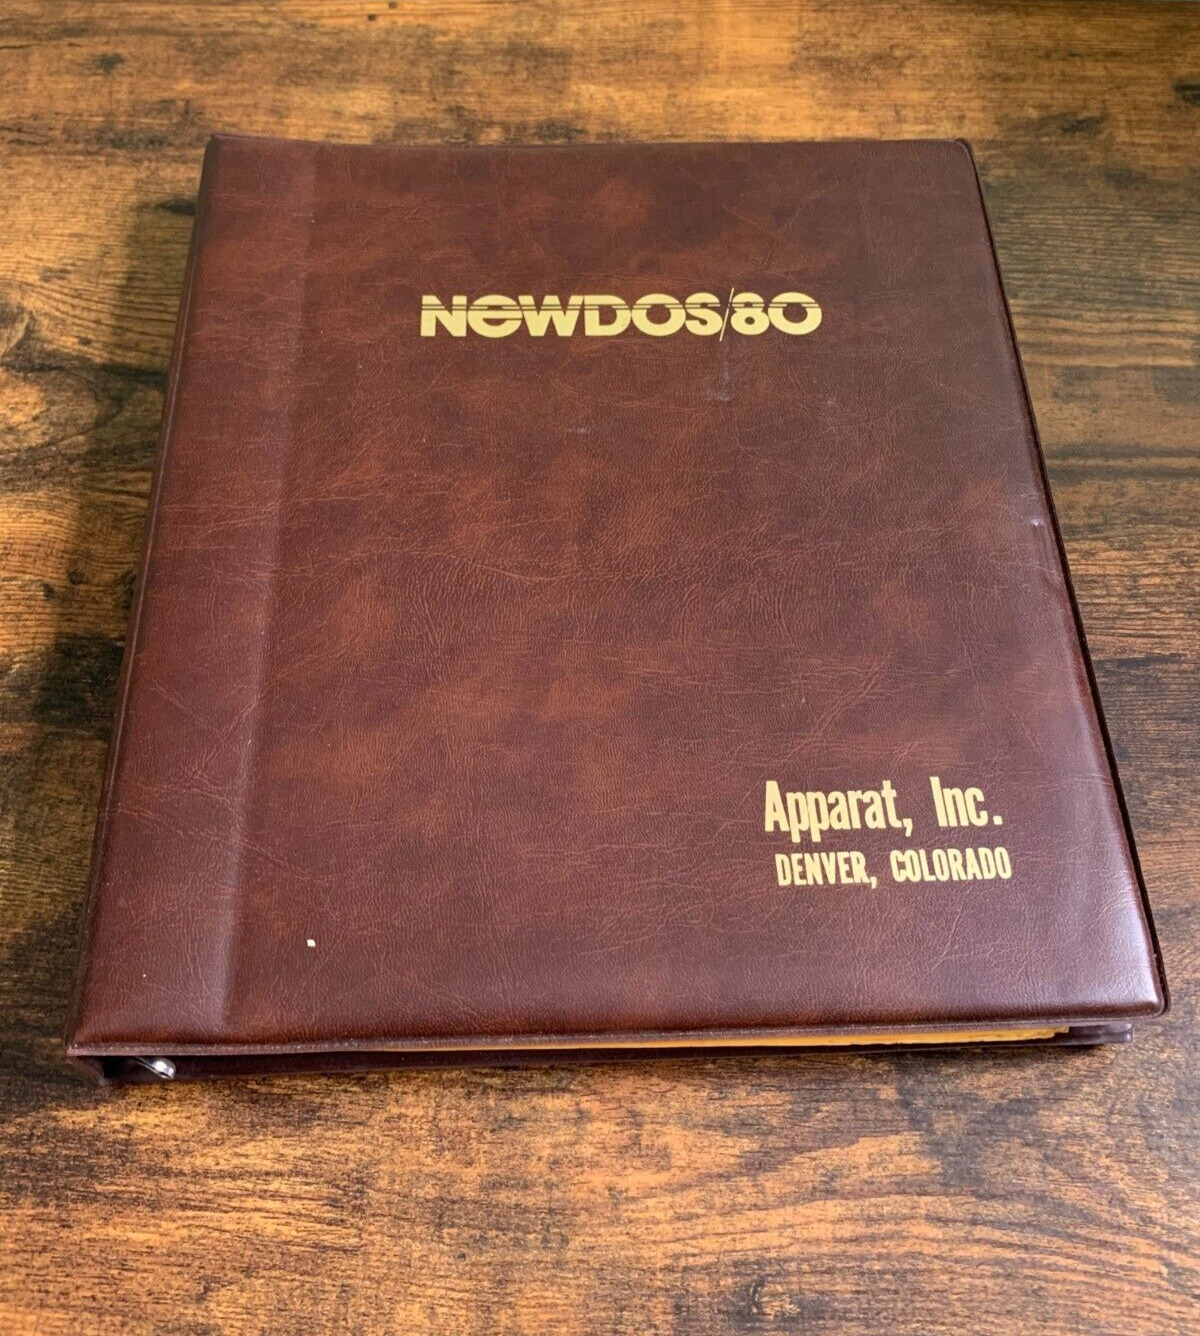 Rare Exclusive Apparat TRS-80 NEWDOS-80 2.0 Model 1 USA RadioShack w/ floppy dsk